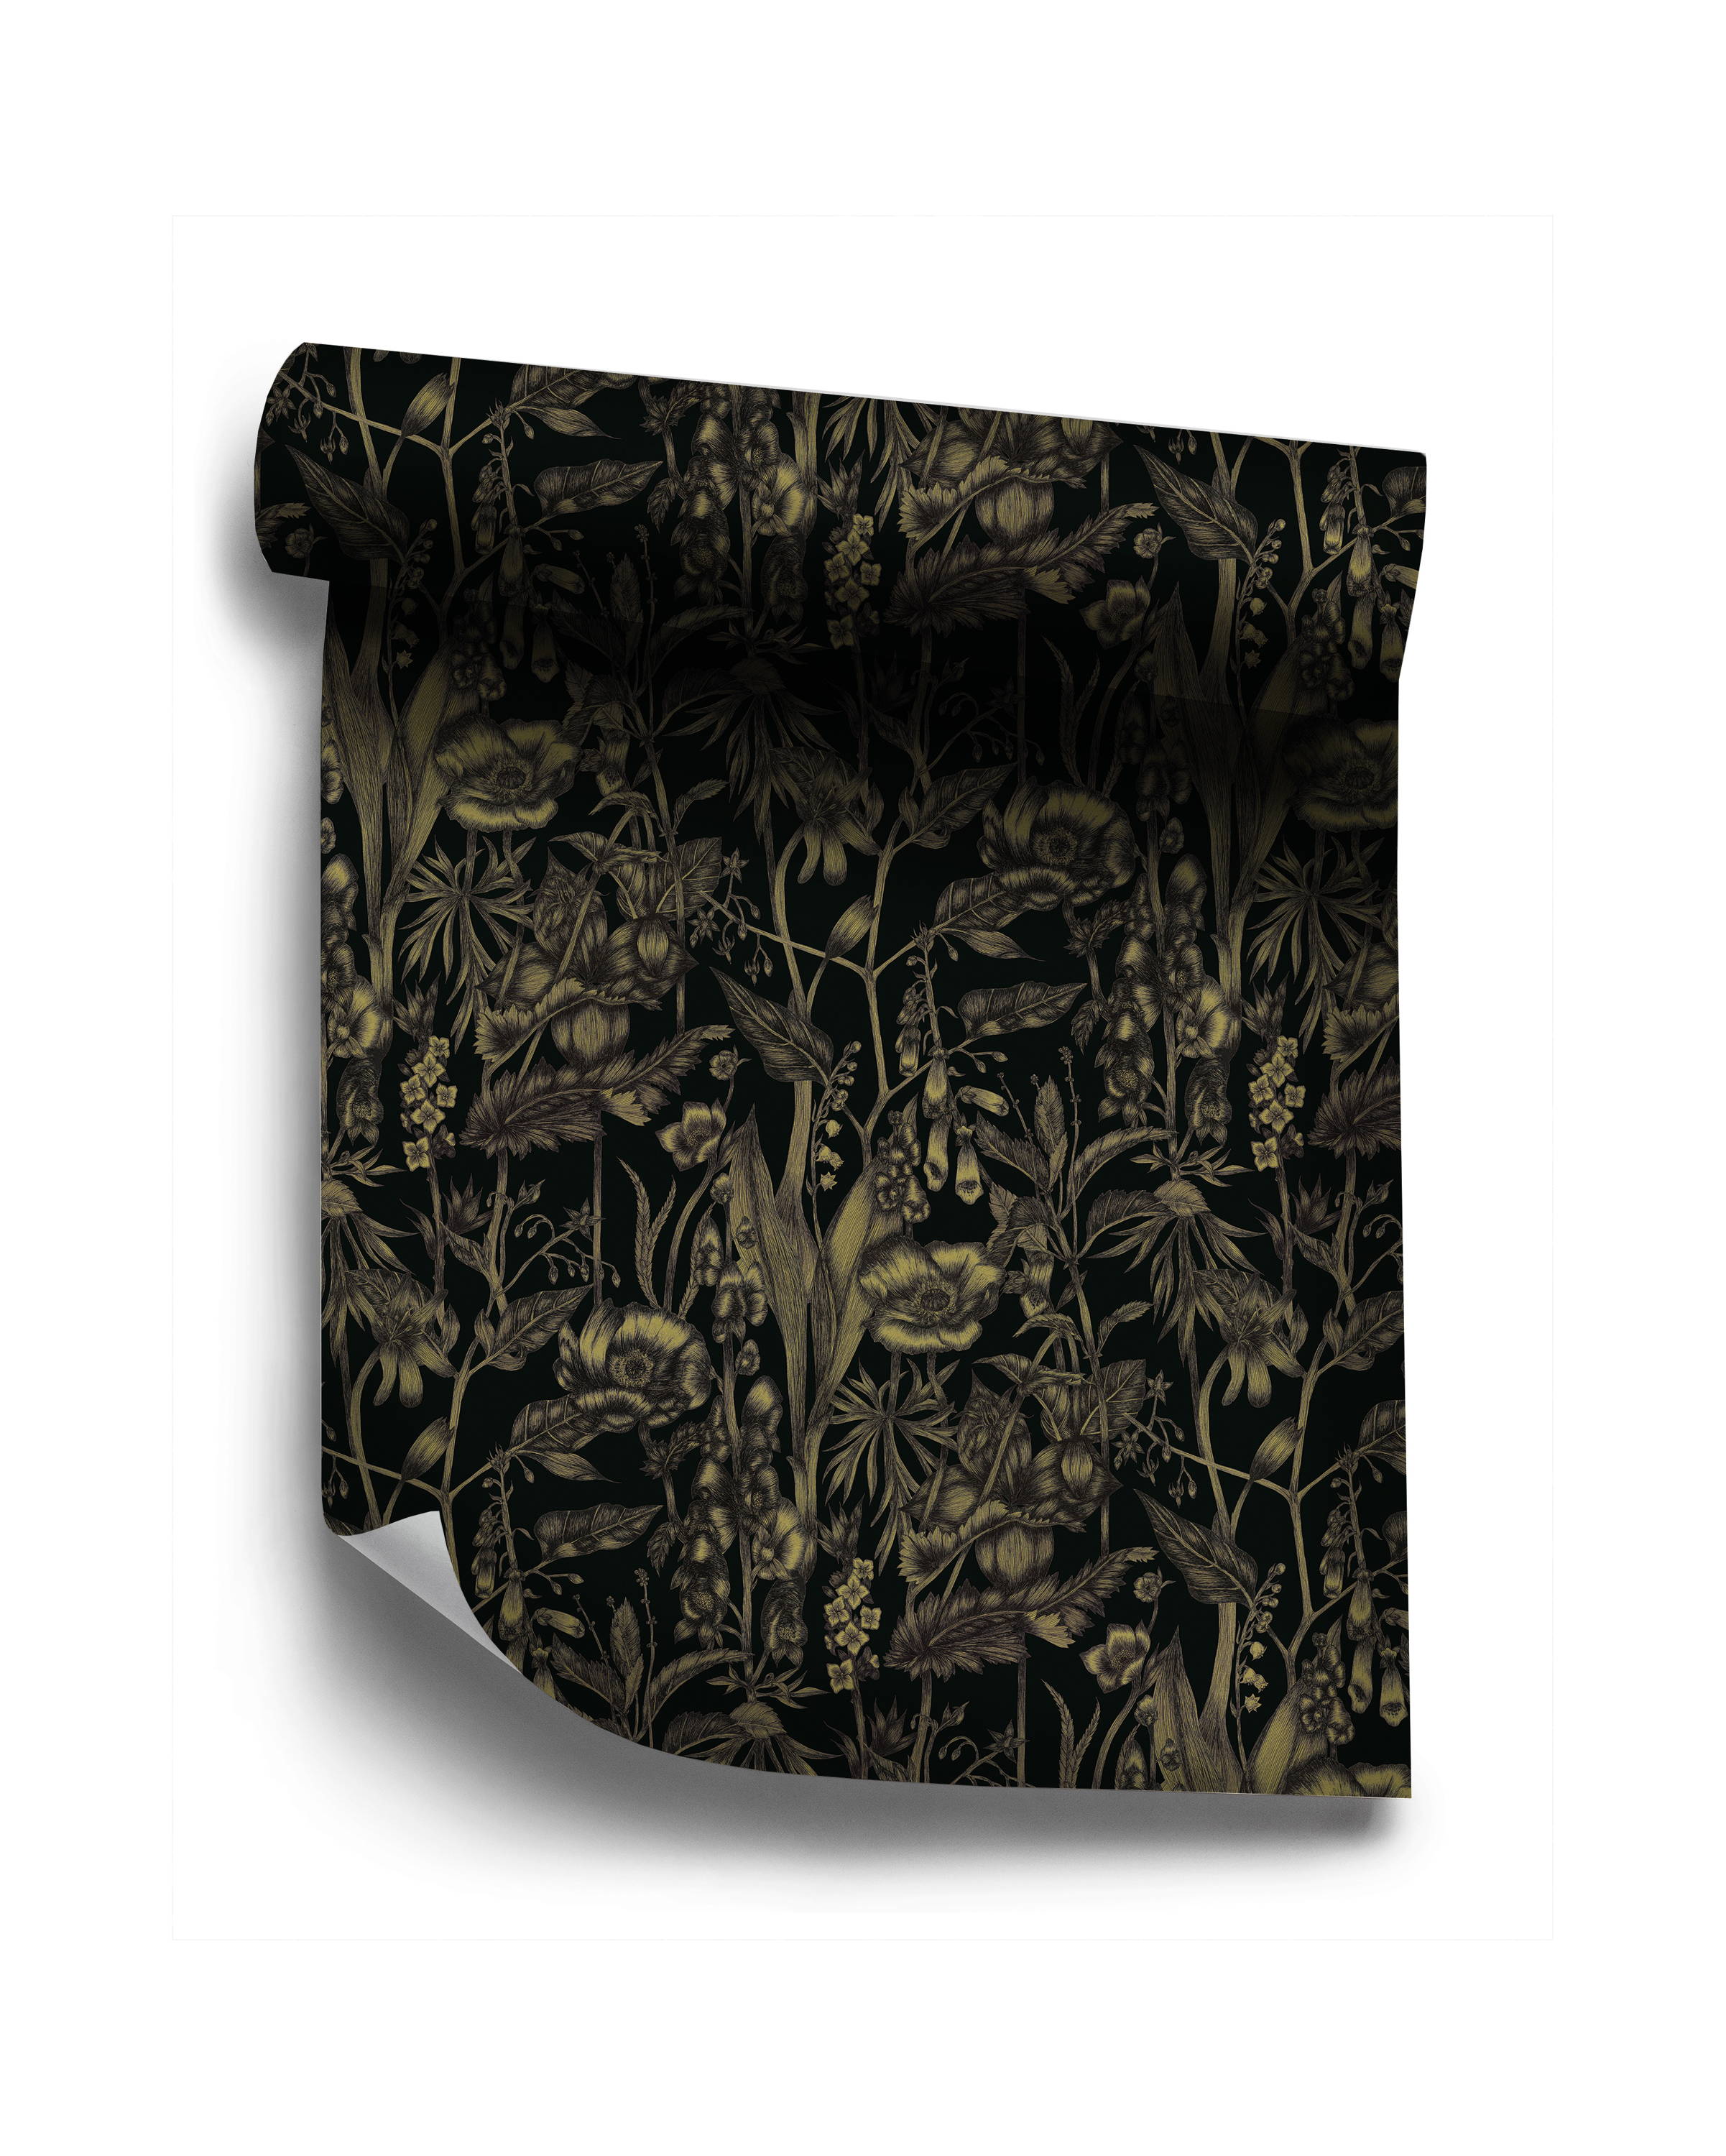 hex-henbane-british-designer-Alnwick-Floral-Pattern-black-gold-dark-interiors-wednesday-collection-spooky-decor